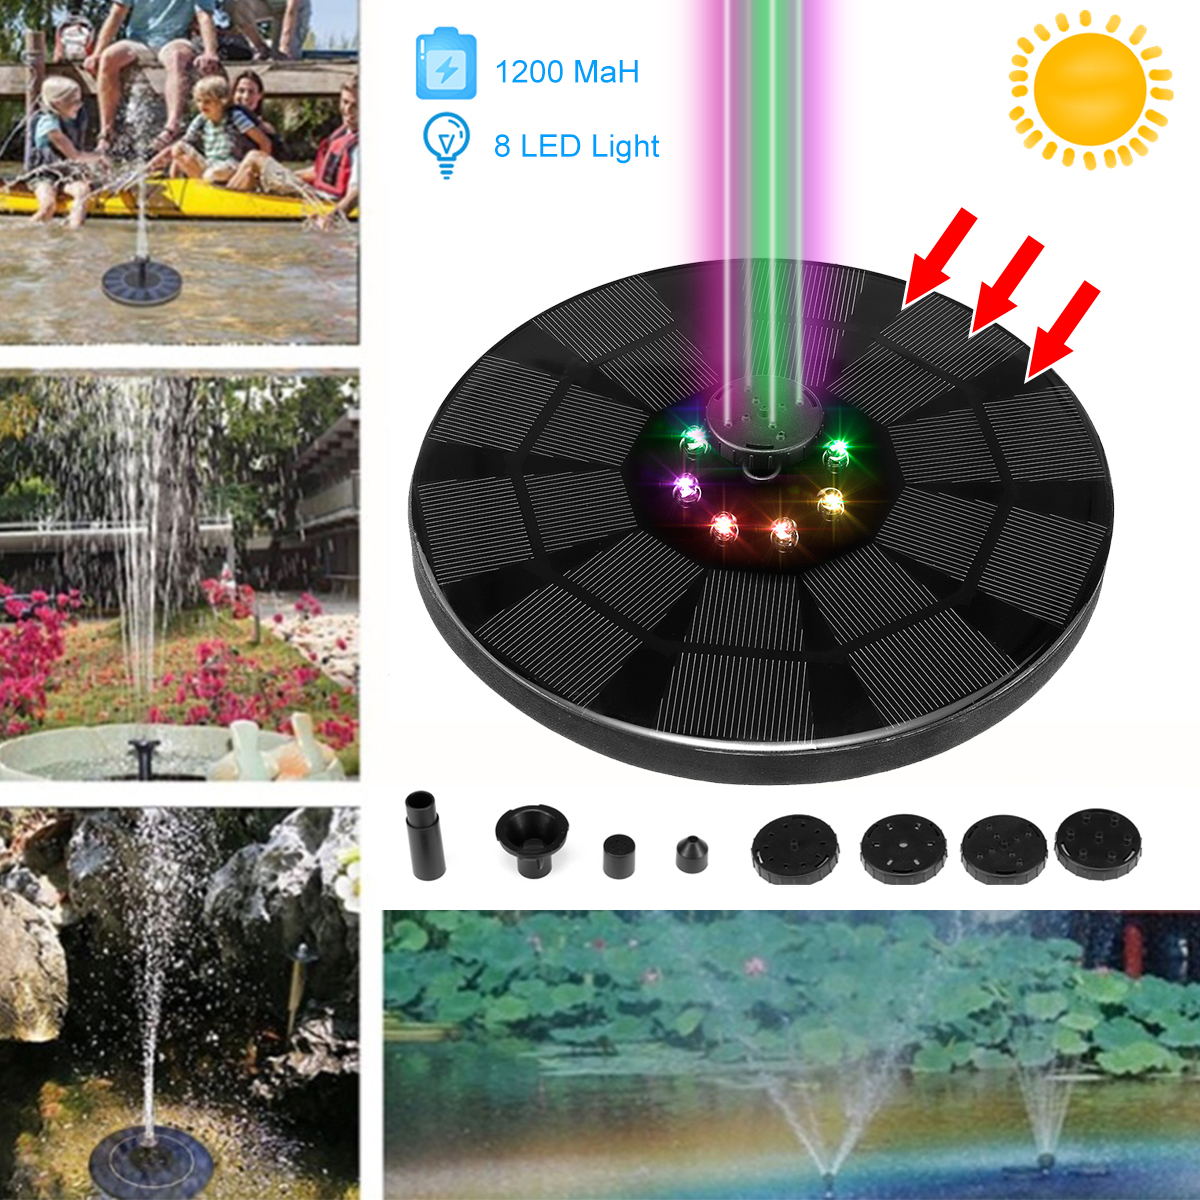 Solar-Powered-Floating-Bird-Bath-Fountain-Outdoor-Pond-Garden-Patio-Water-Pump-W-8-LED-Light-1844028-2